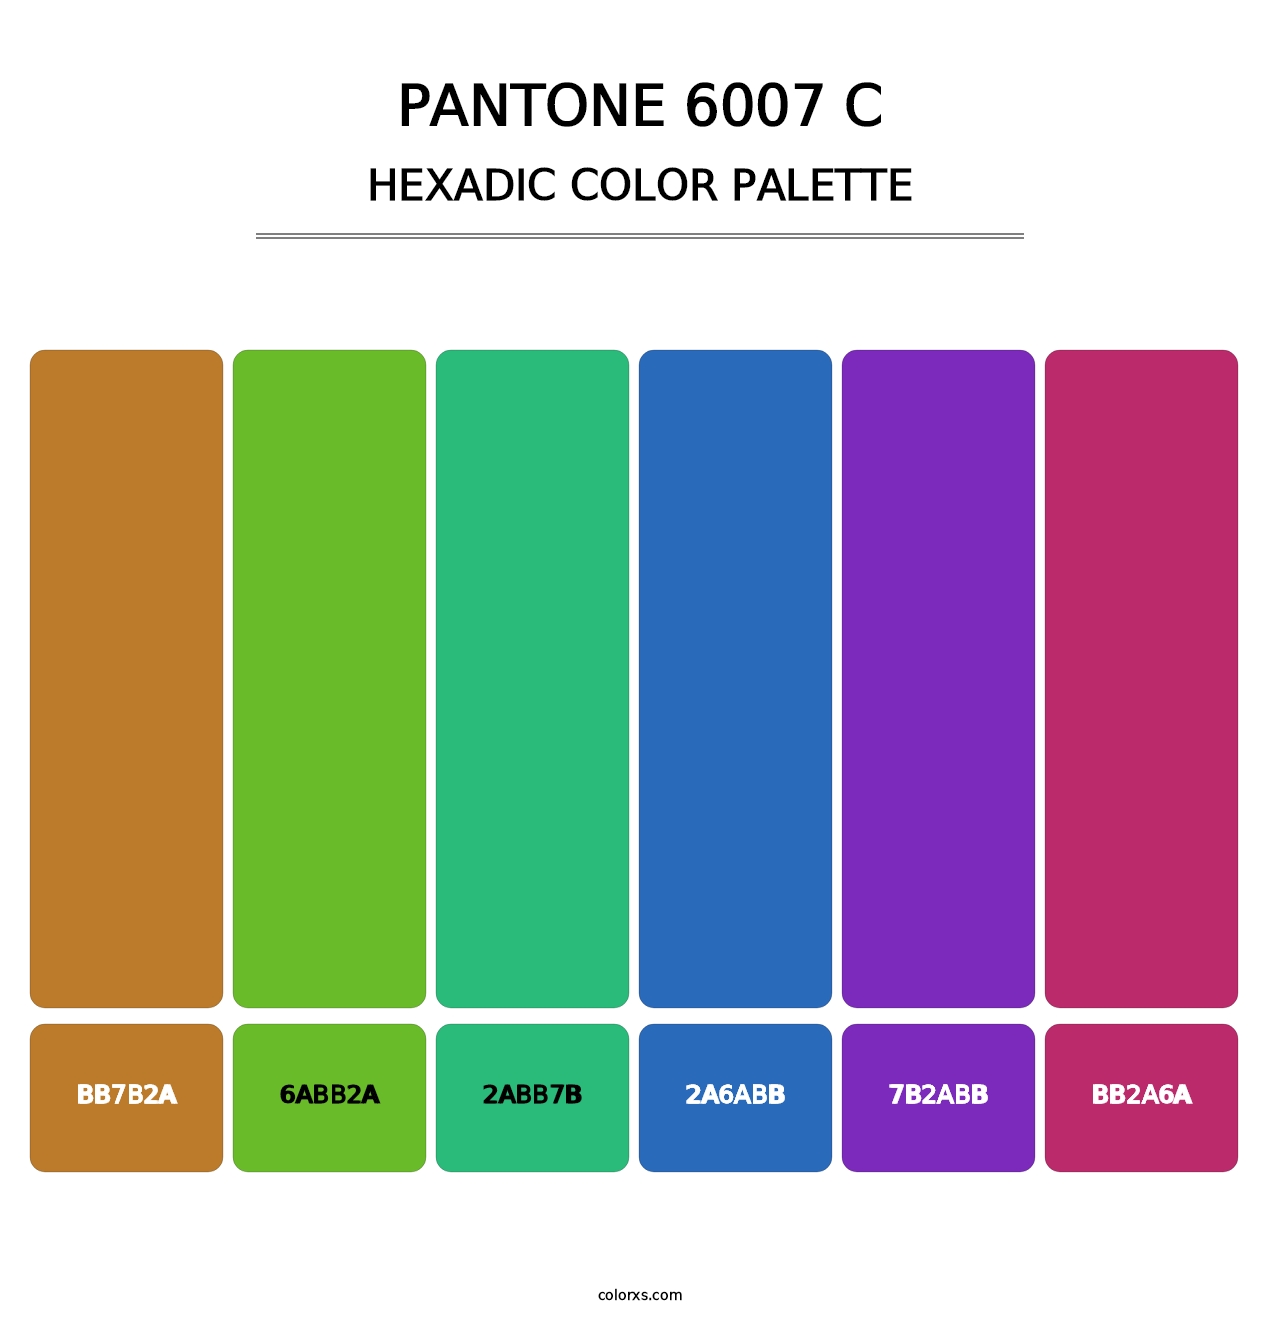 PANTONE 6007 C - Hexadic Color Palette